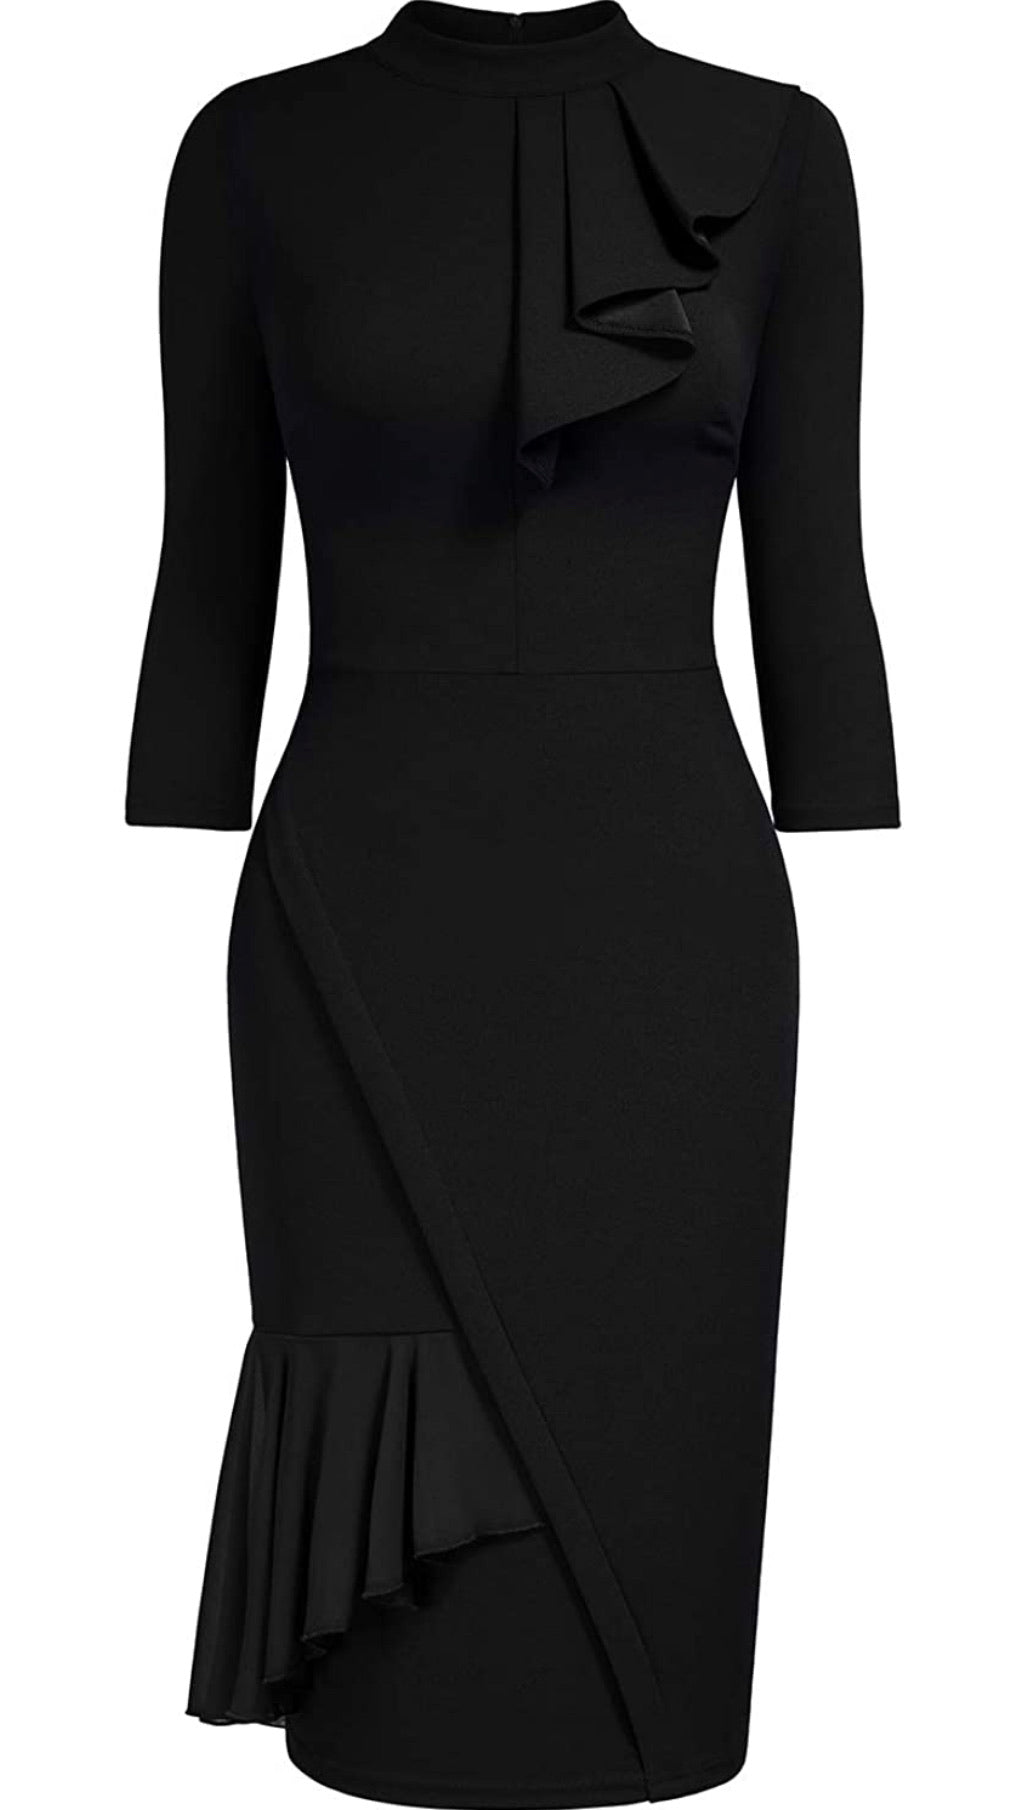 Vintage Inspired Pencil Dress, Sizes US 4 - 18 (Black)